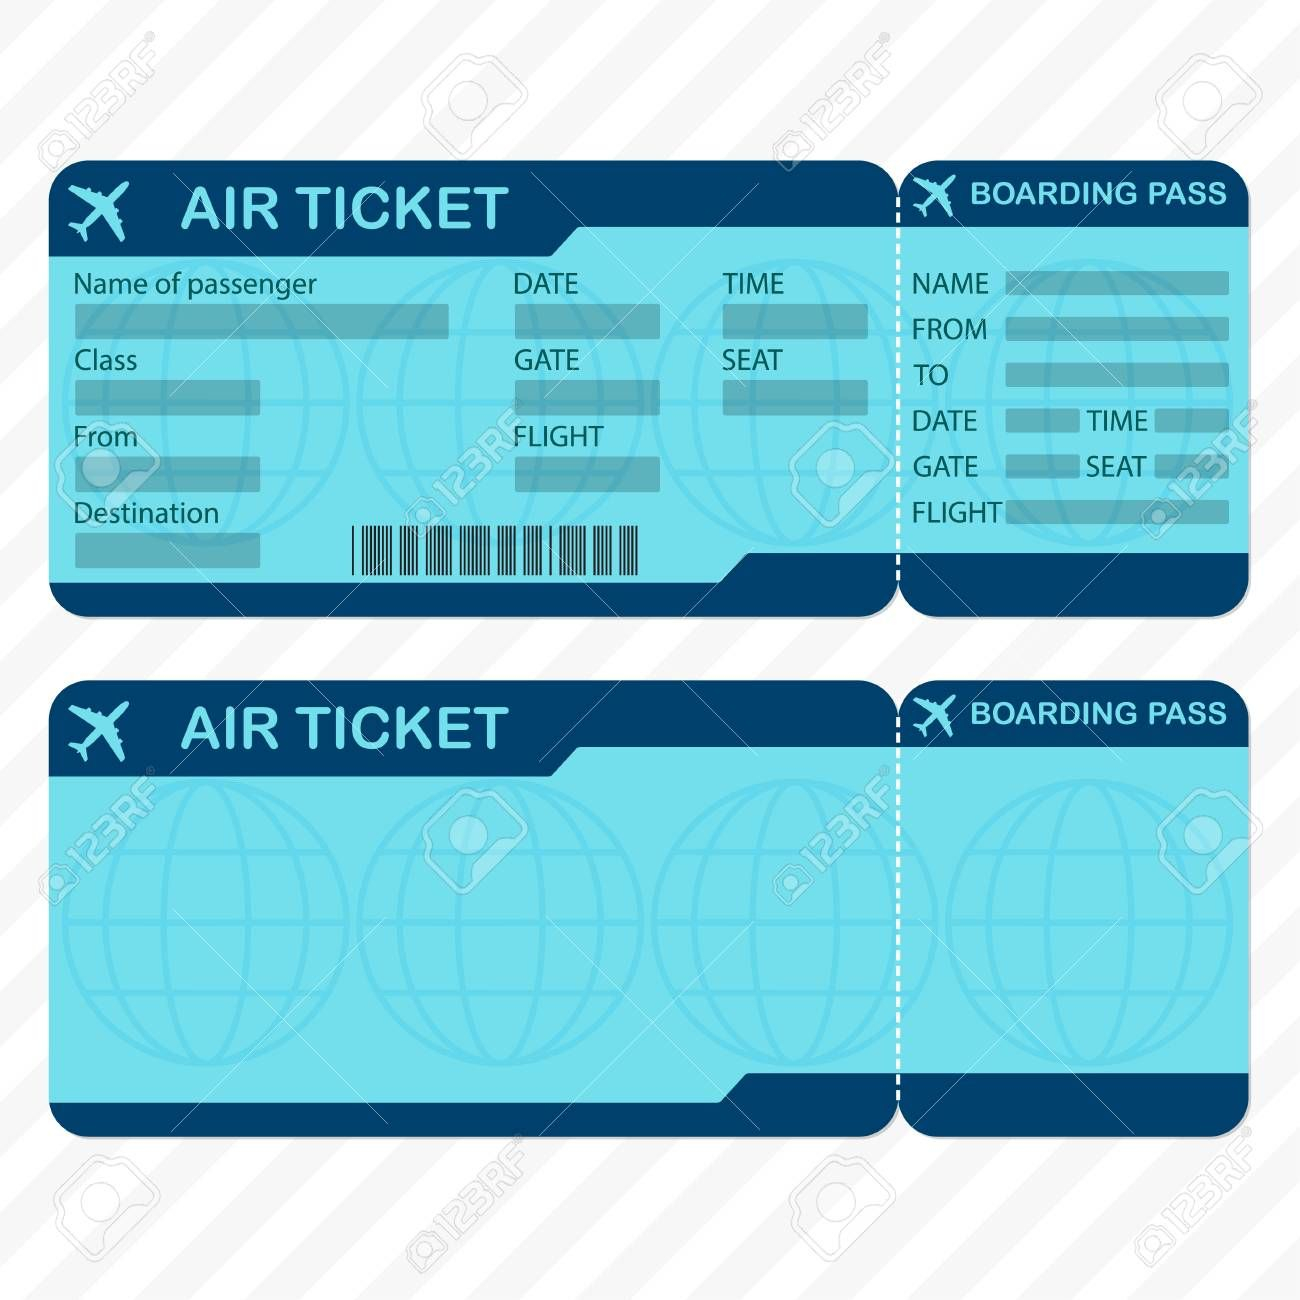 Plane Ticket Template Calep midnightpig co Throughout Plane Ticket